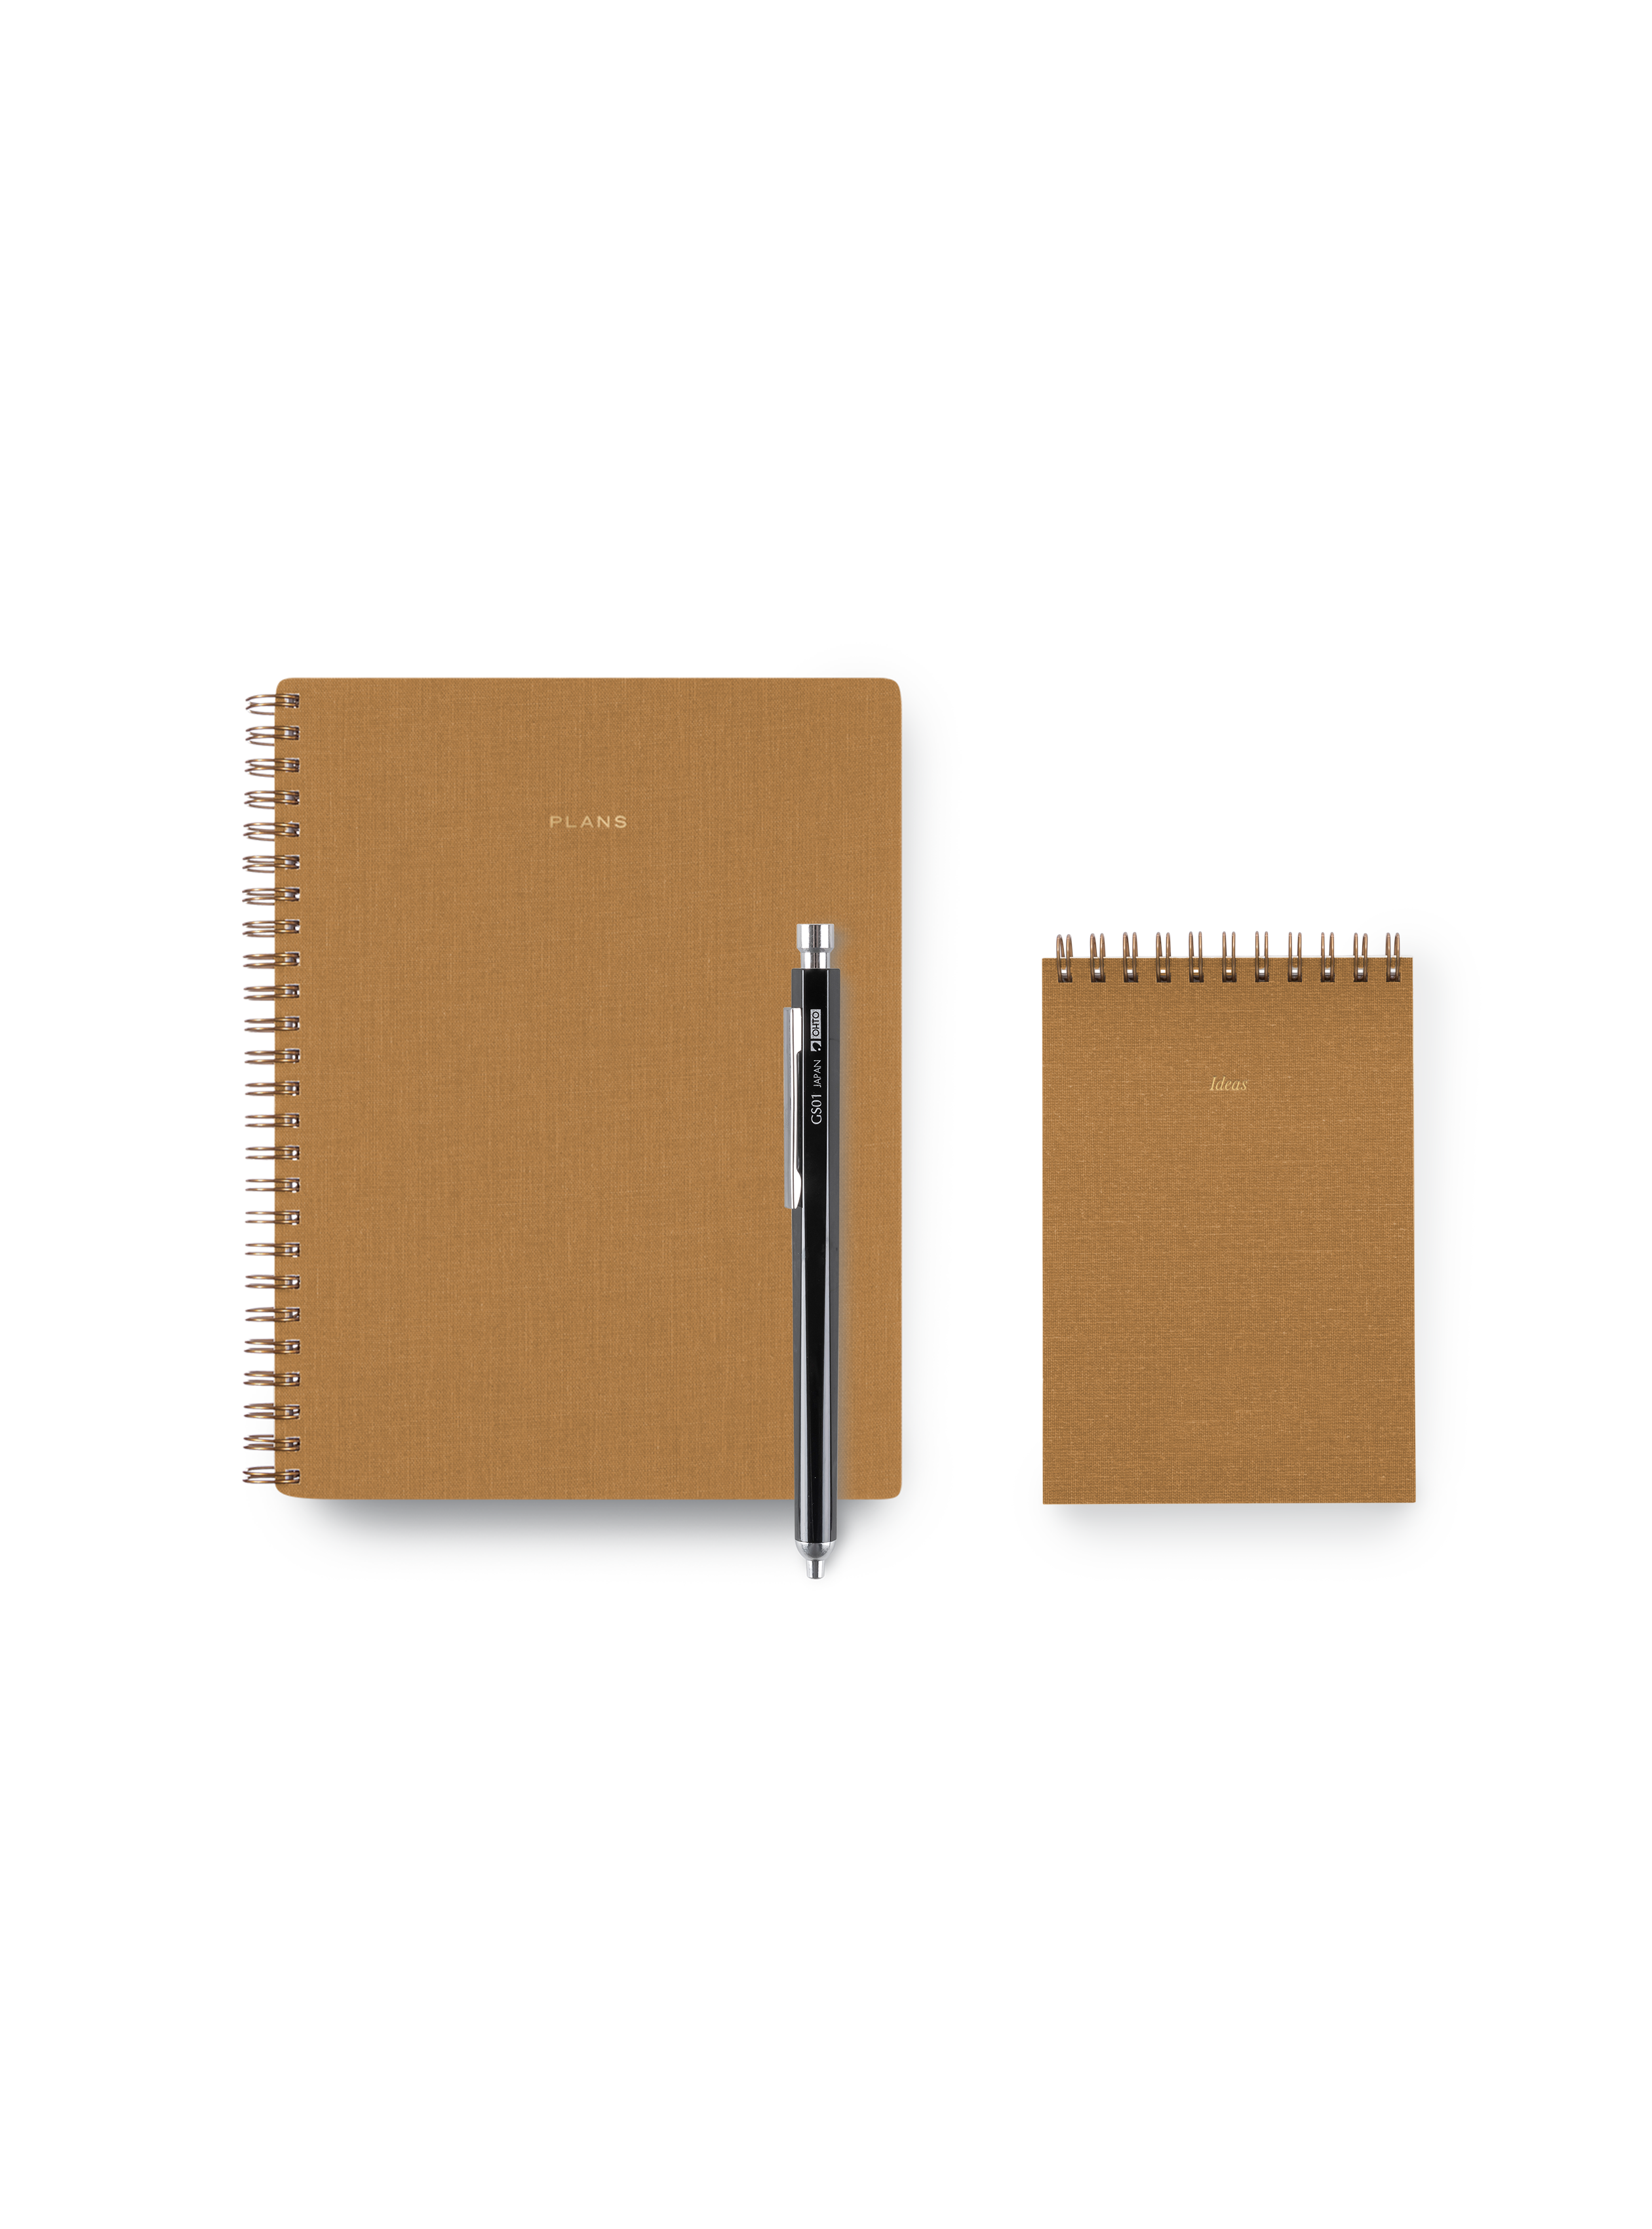 Entrepreneur set containing Plans Journal, Ideas Notepad, and Horizon Ballpoint Pen